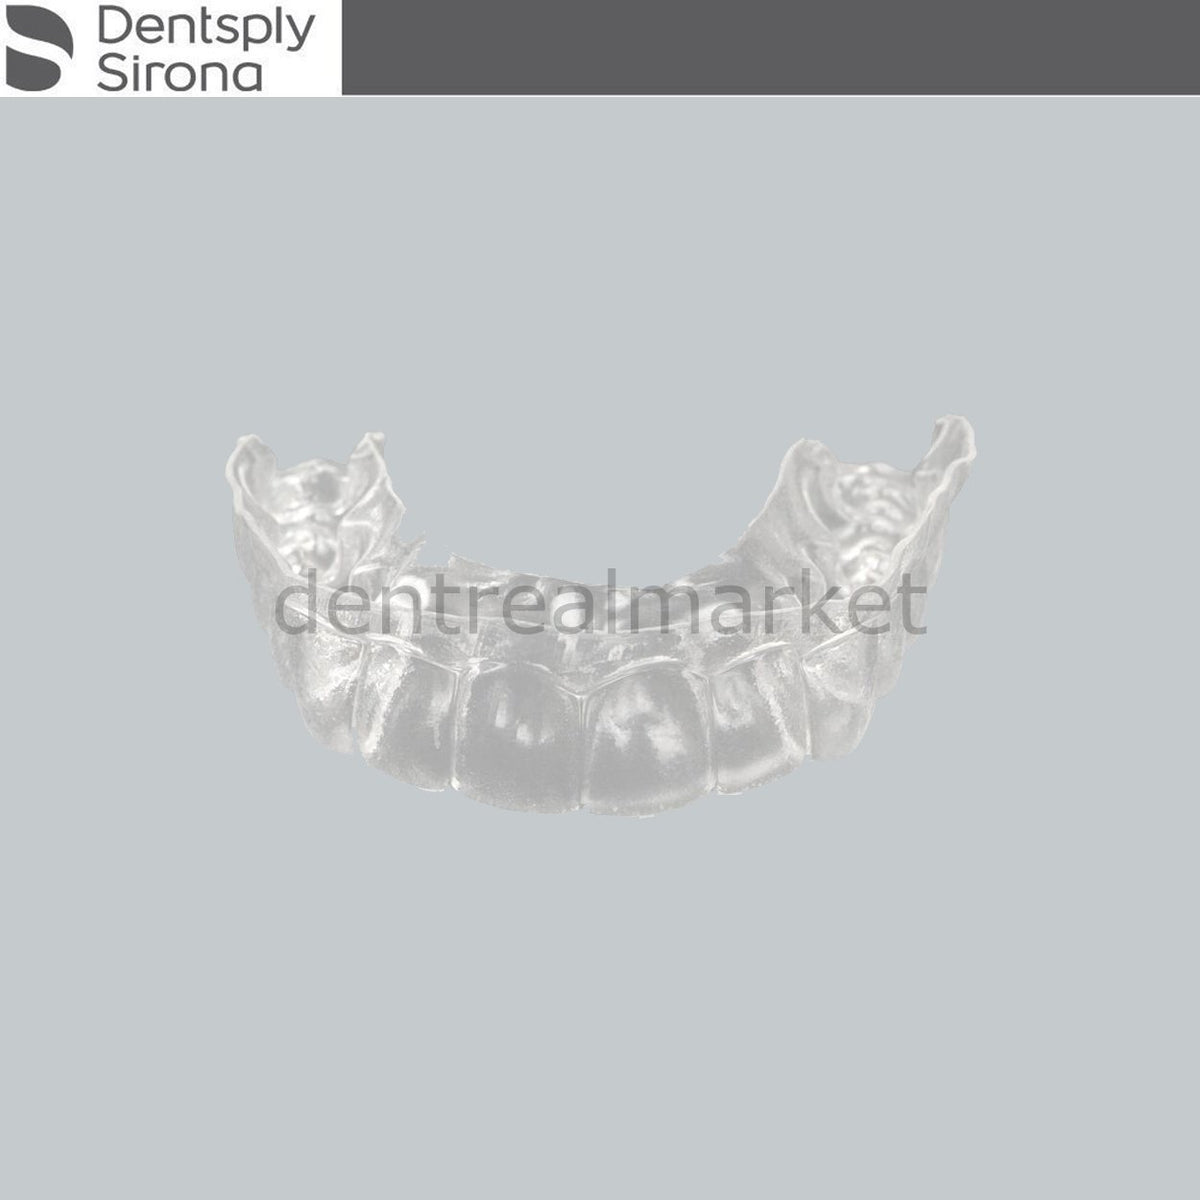 DentrealStore - Dentsply-Sirona Orthodontic Essix A+ Plastic - 080" - Square 125 mm